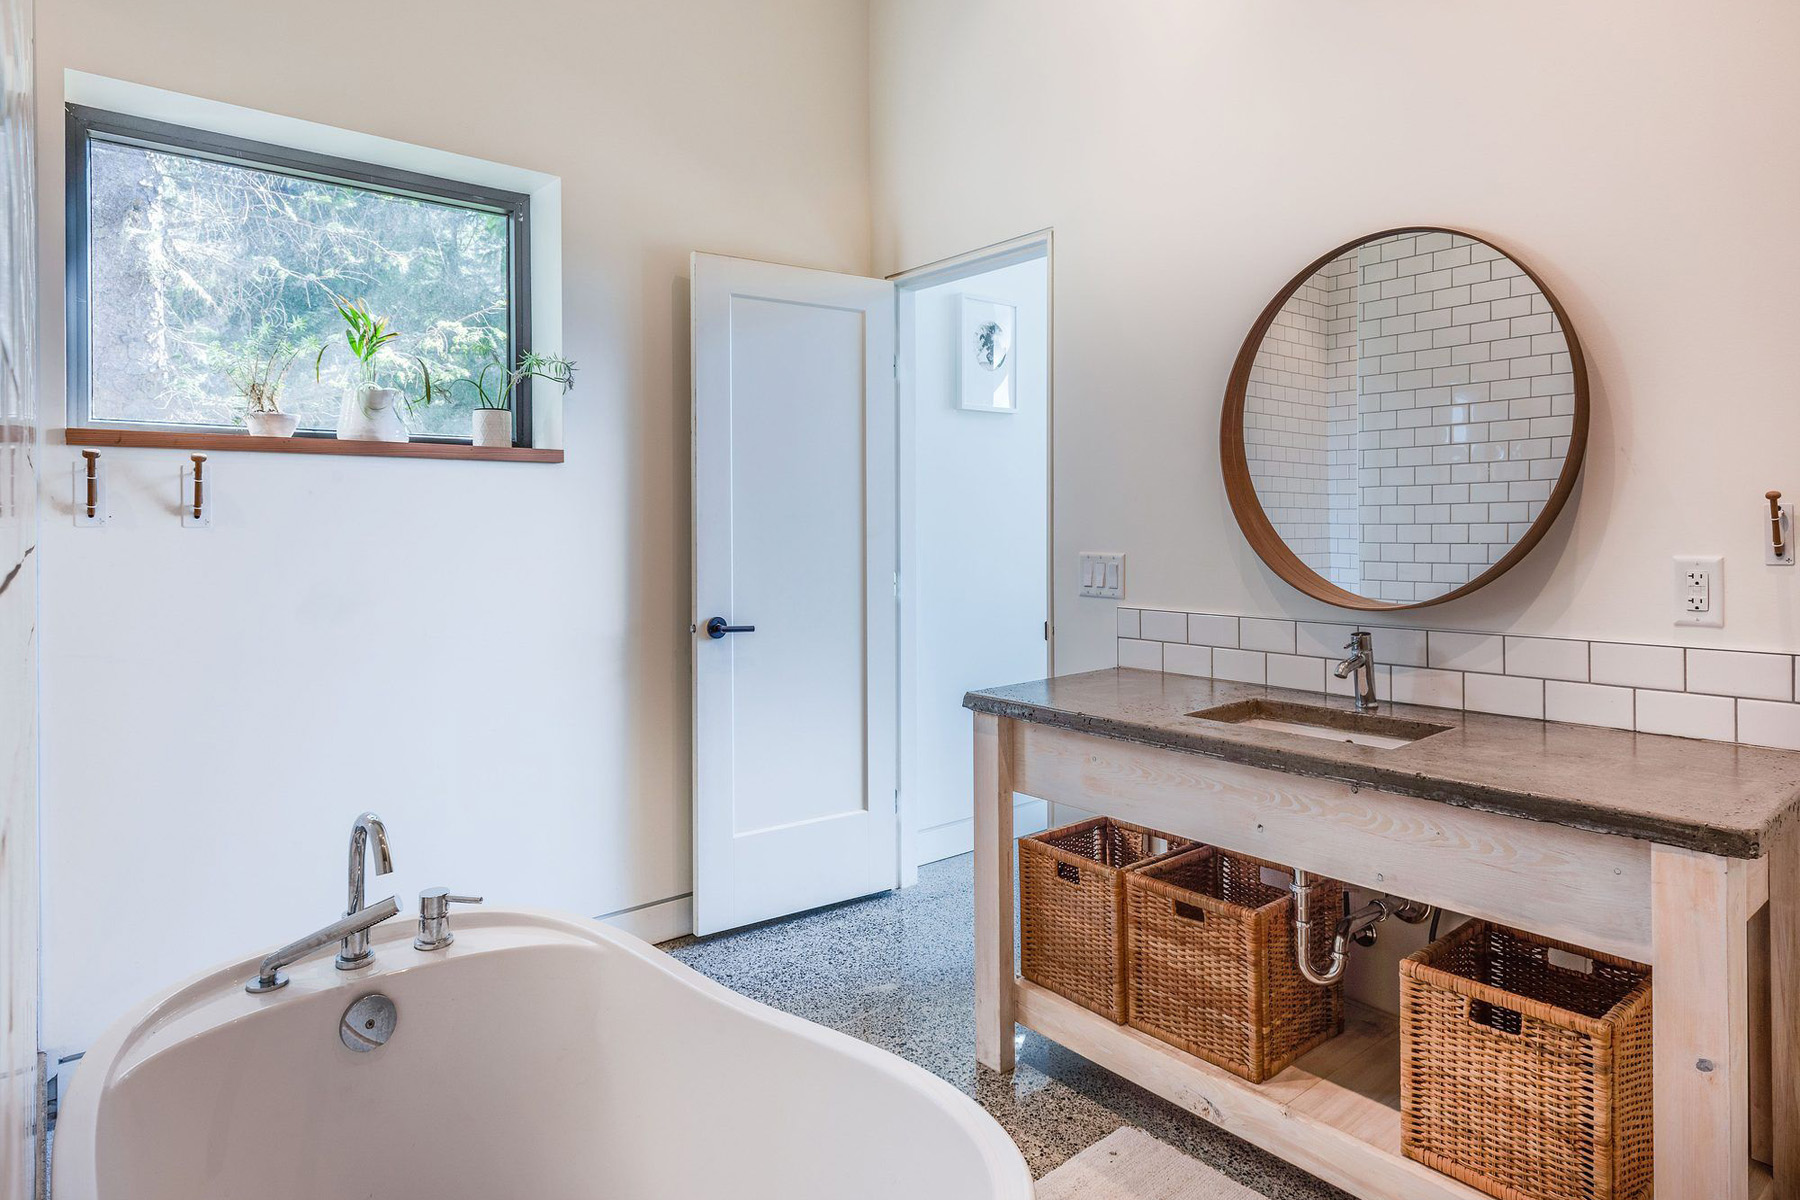 bathroom vanity with concrete countertop, white undermount sink, white tile backsplash